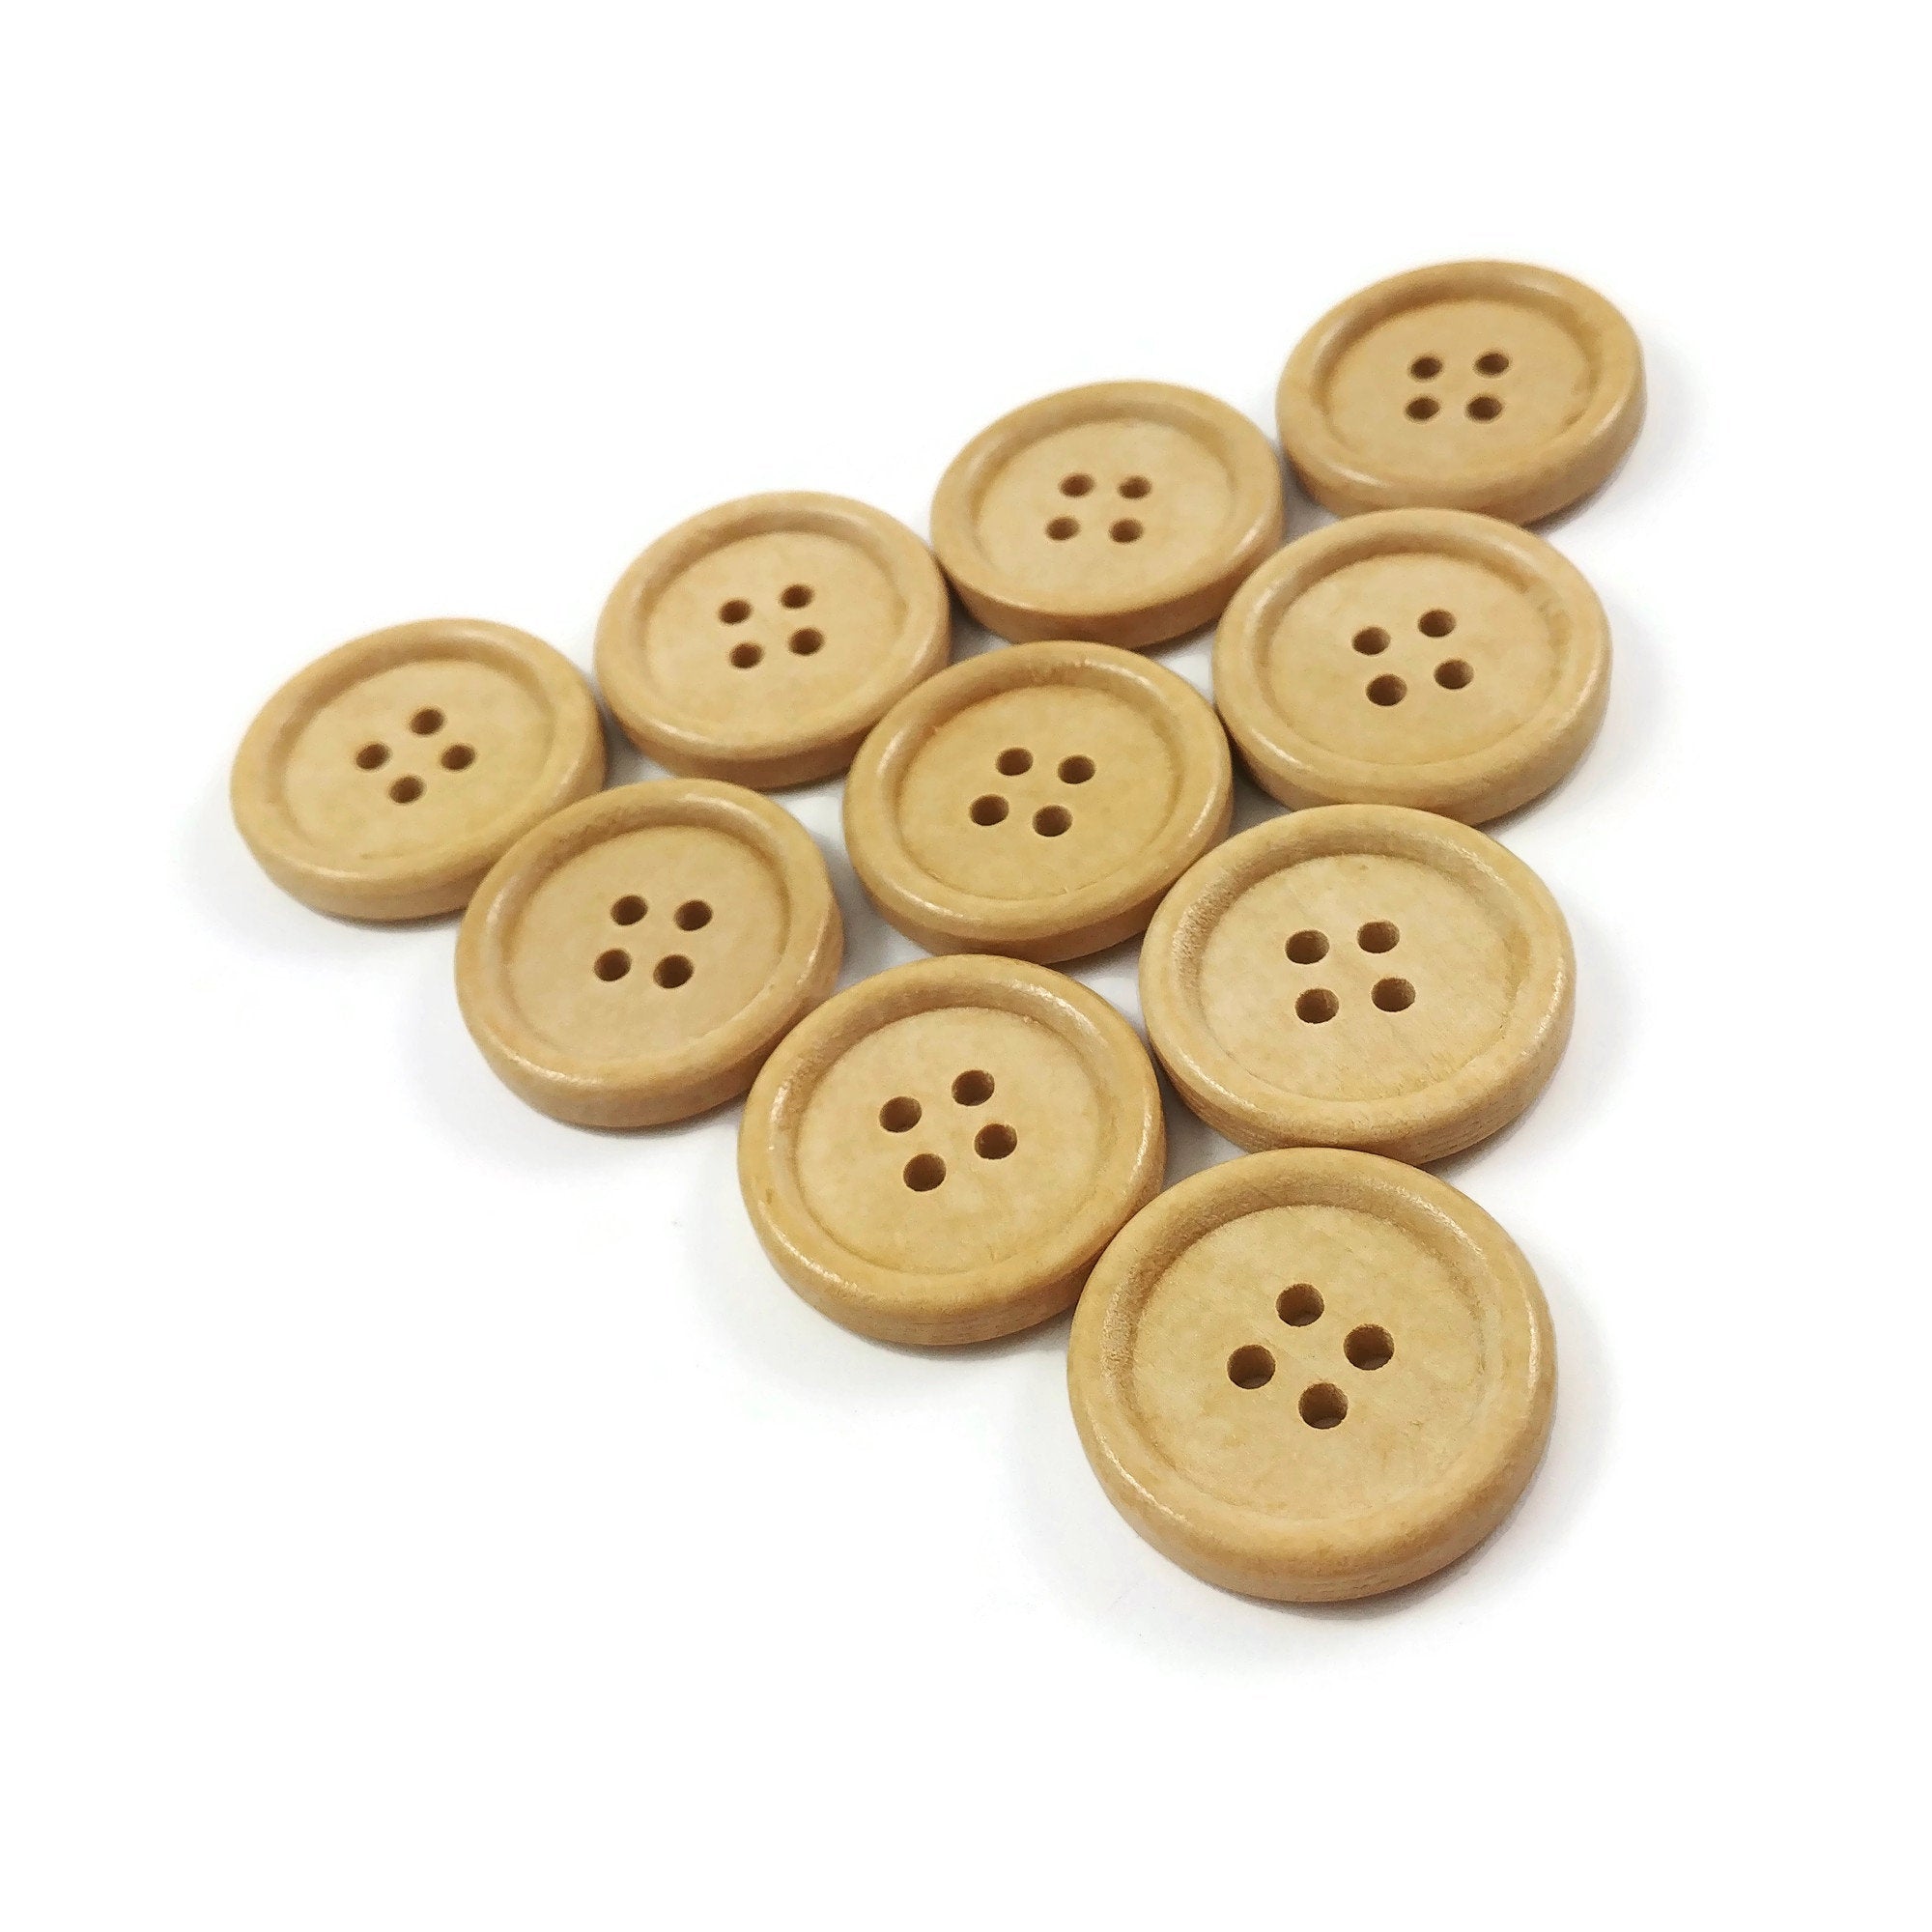 Natural wood button set of 10 craft button 23mm